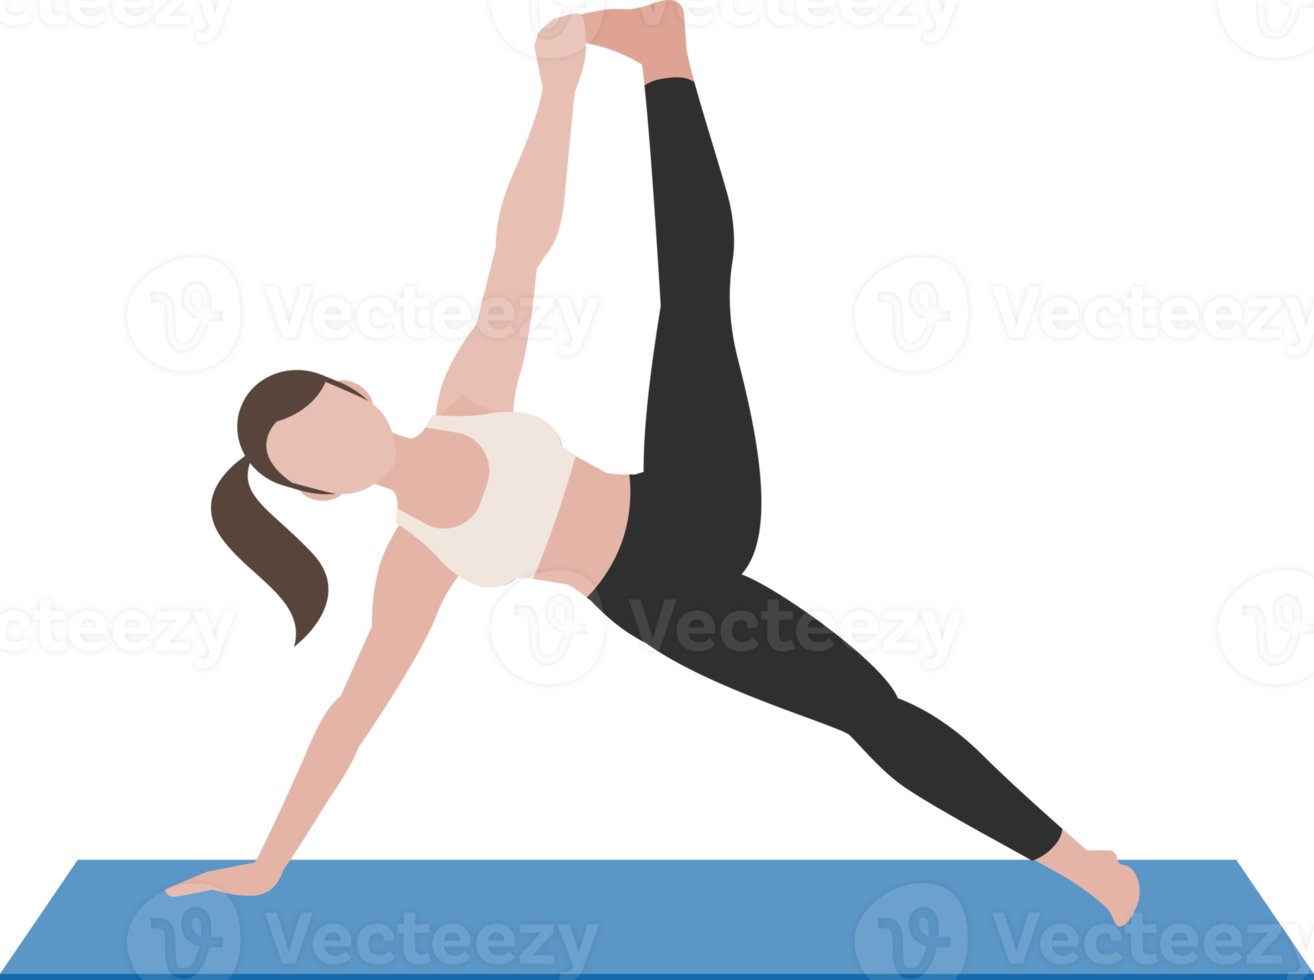 Yoga postures exercises png